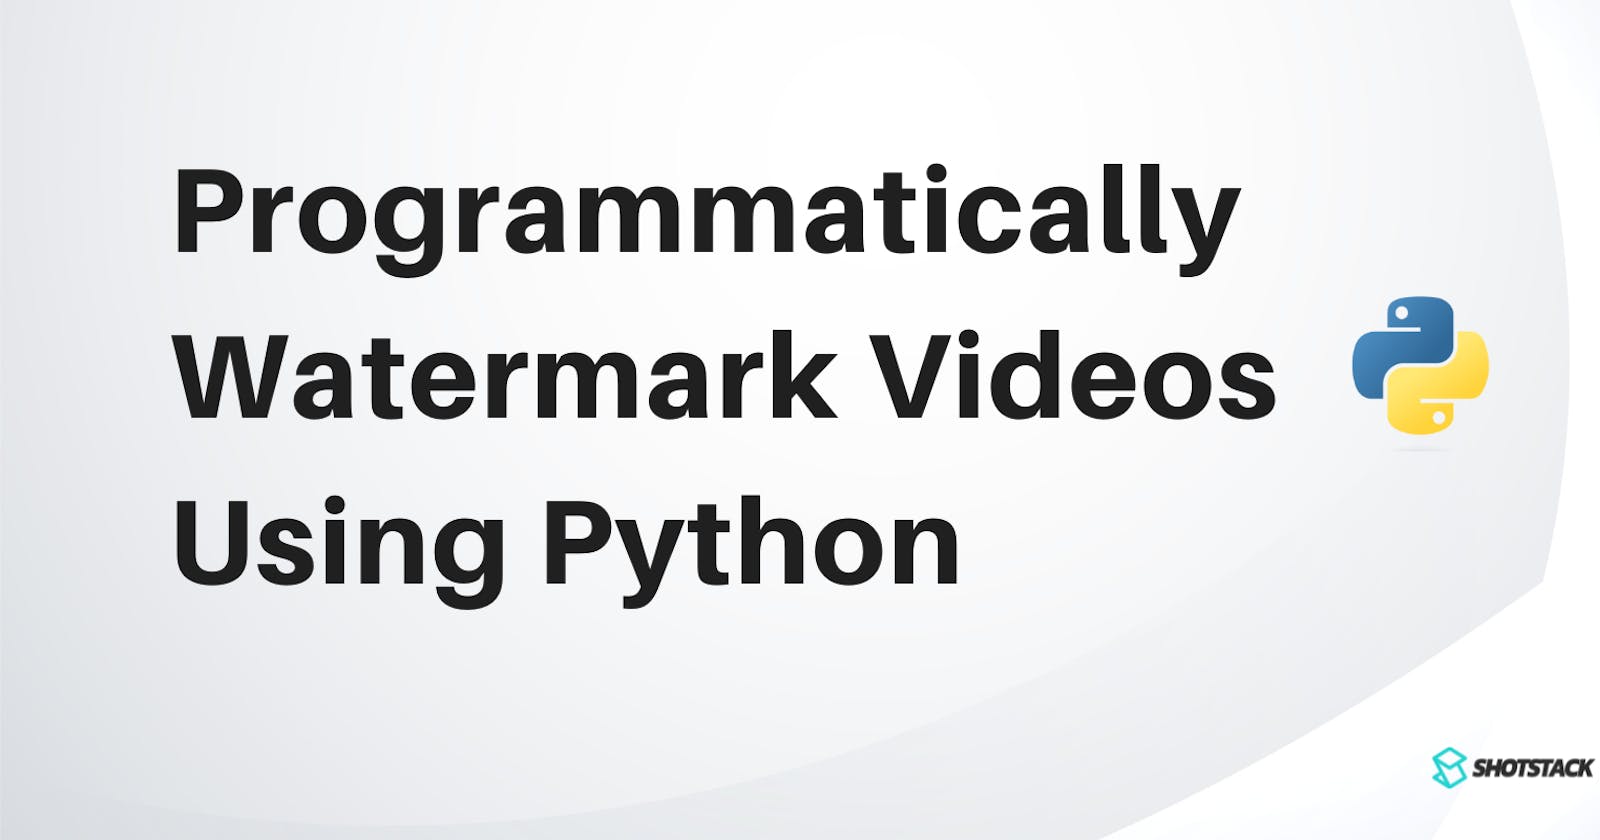 Programmatically watermark videos using Python